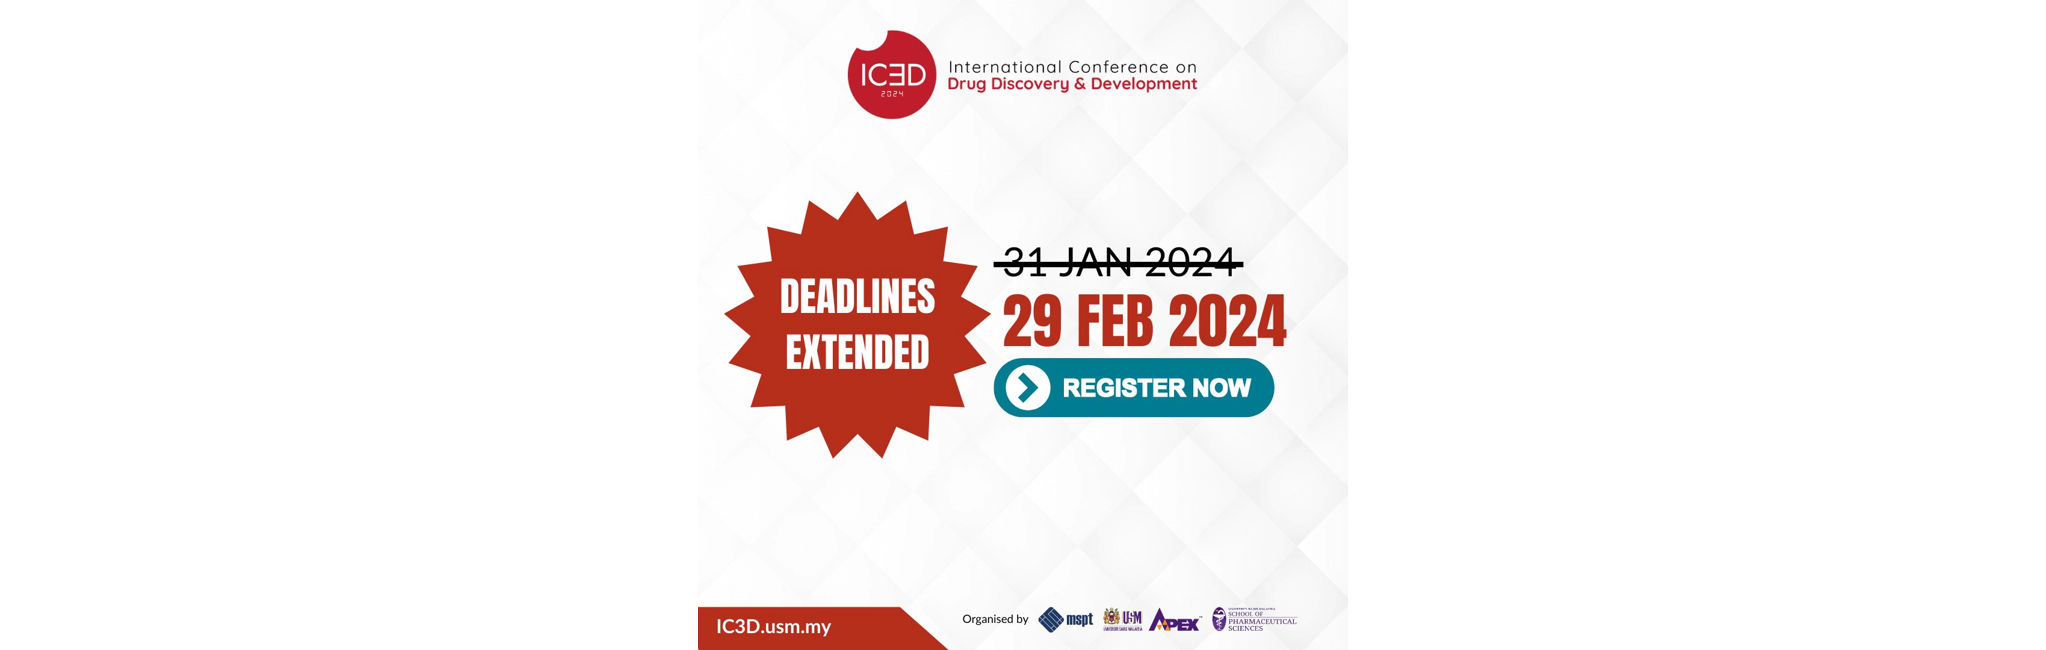 IC3D Extended Deadlines Banner